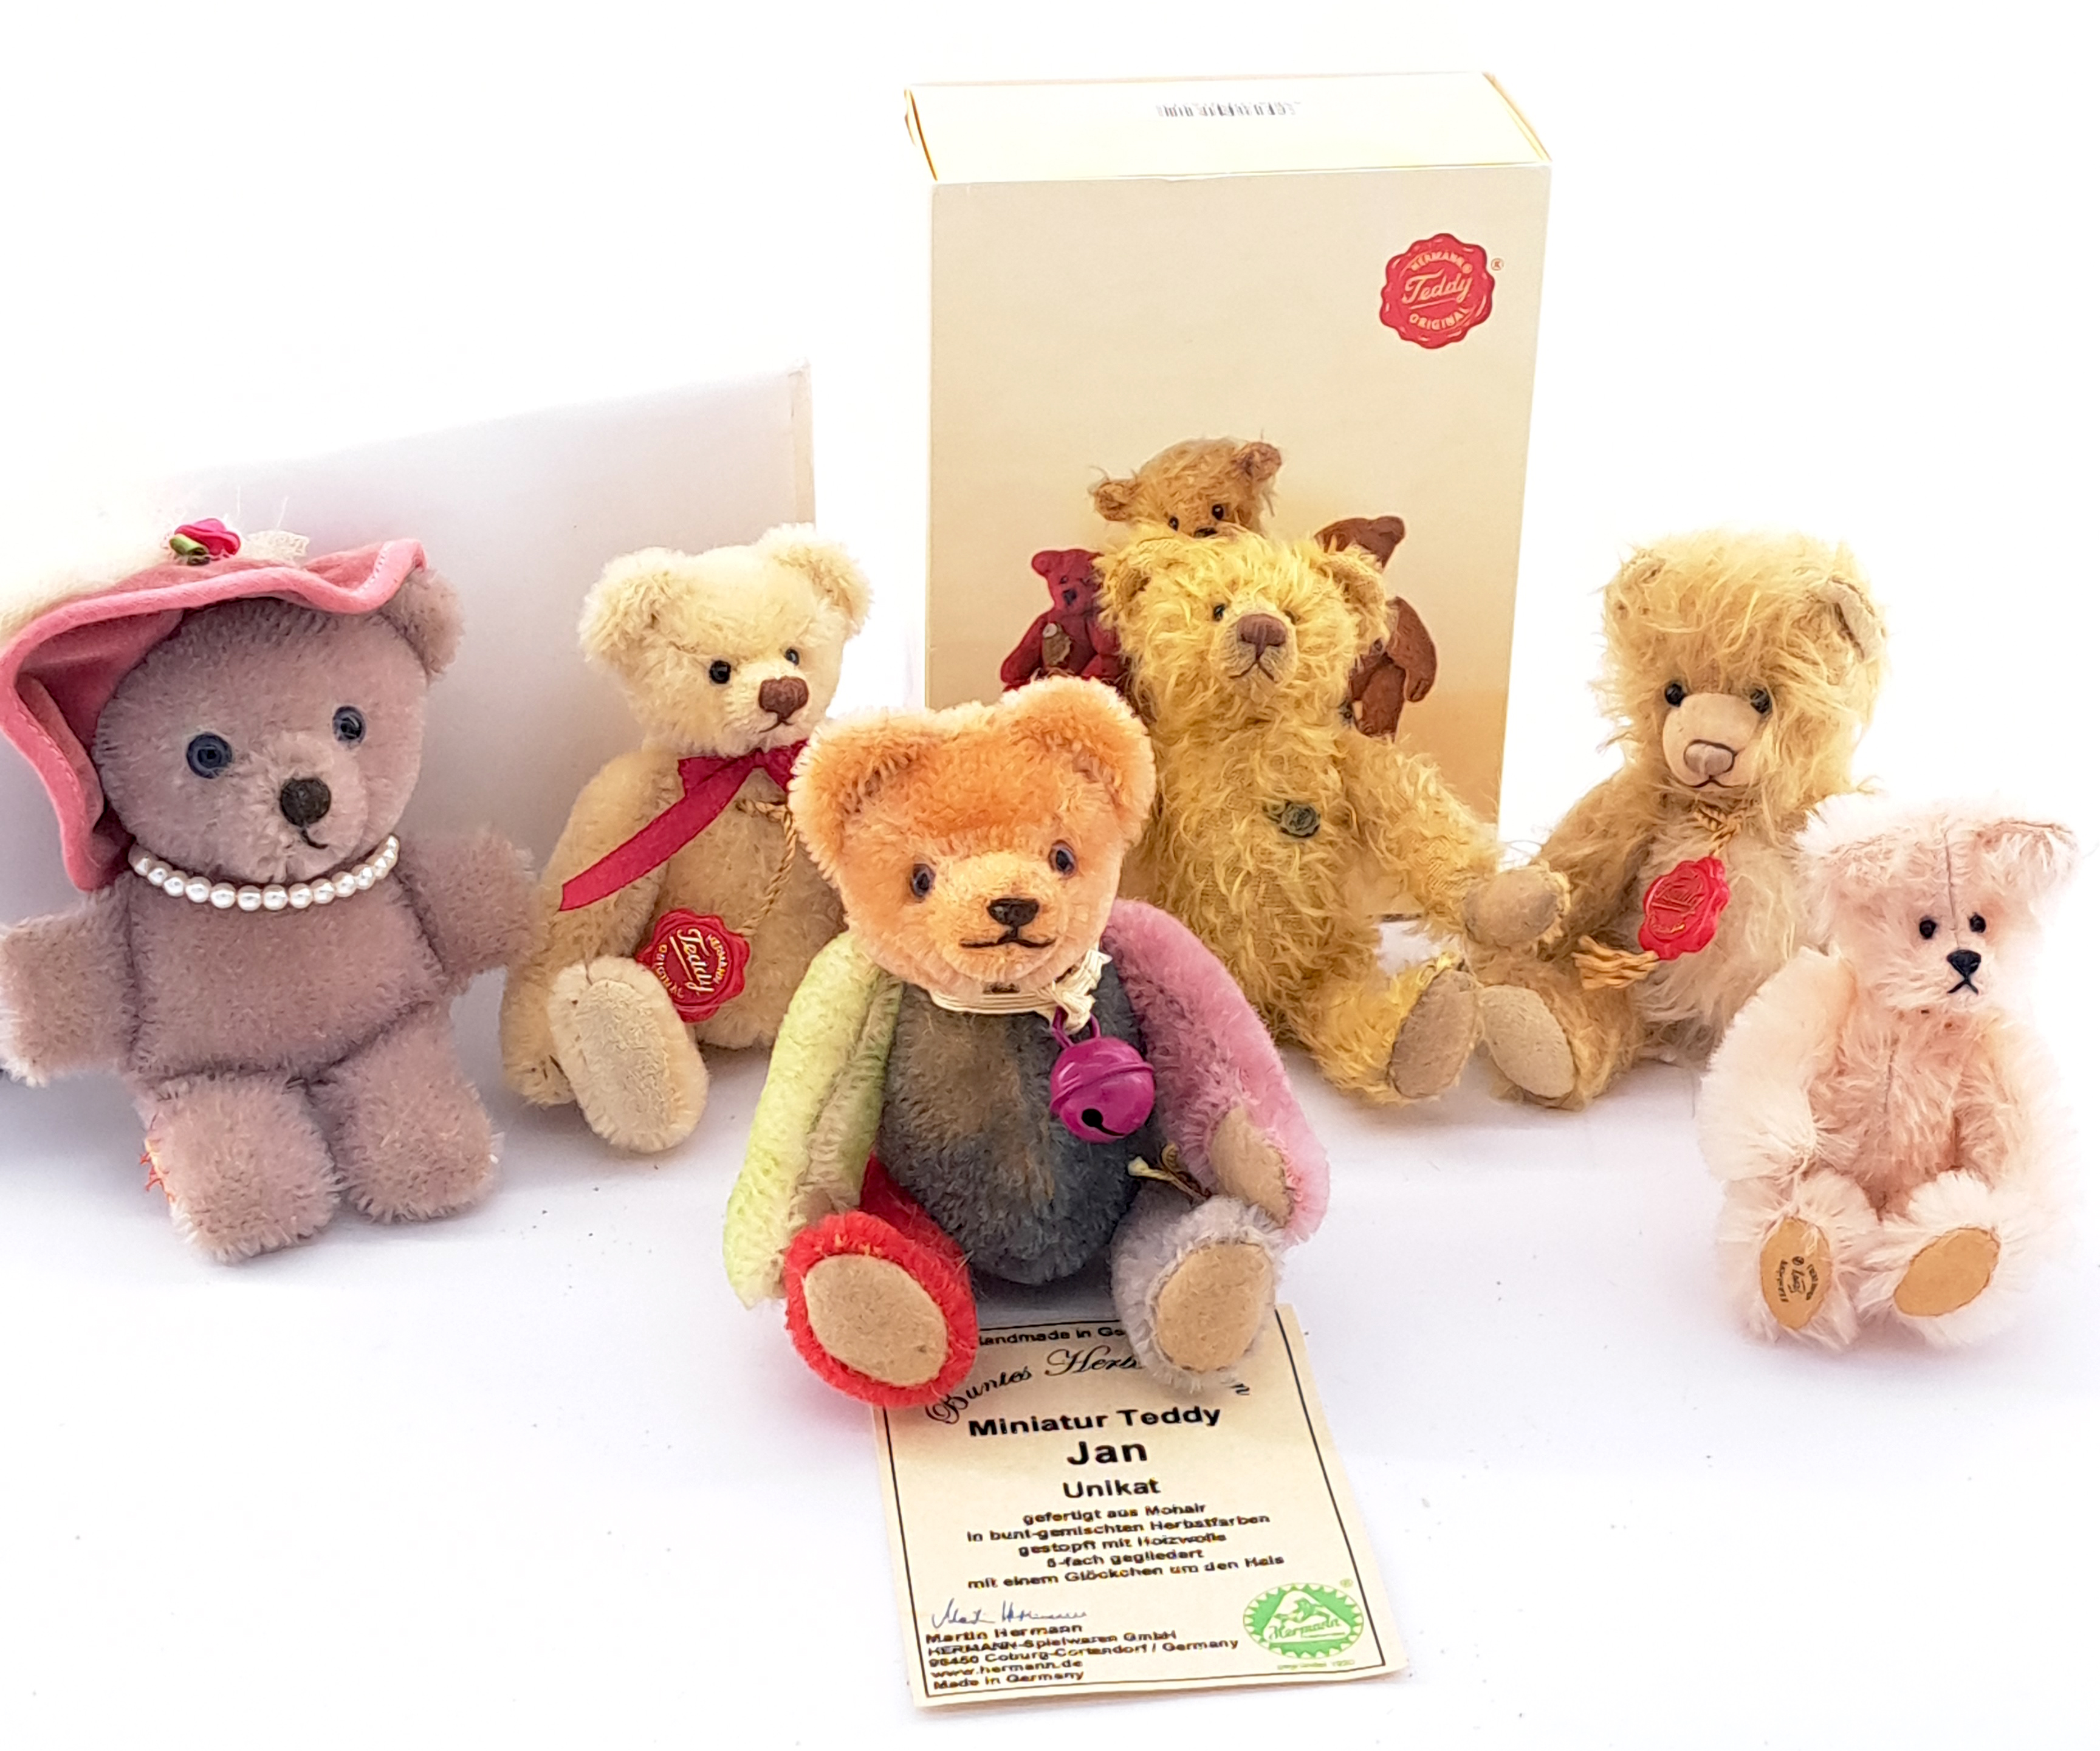 Teddy-Hermann and Hermann-Spielwaren collection of miniature teddy bears